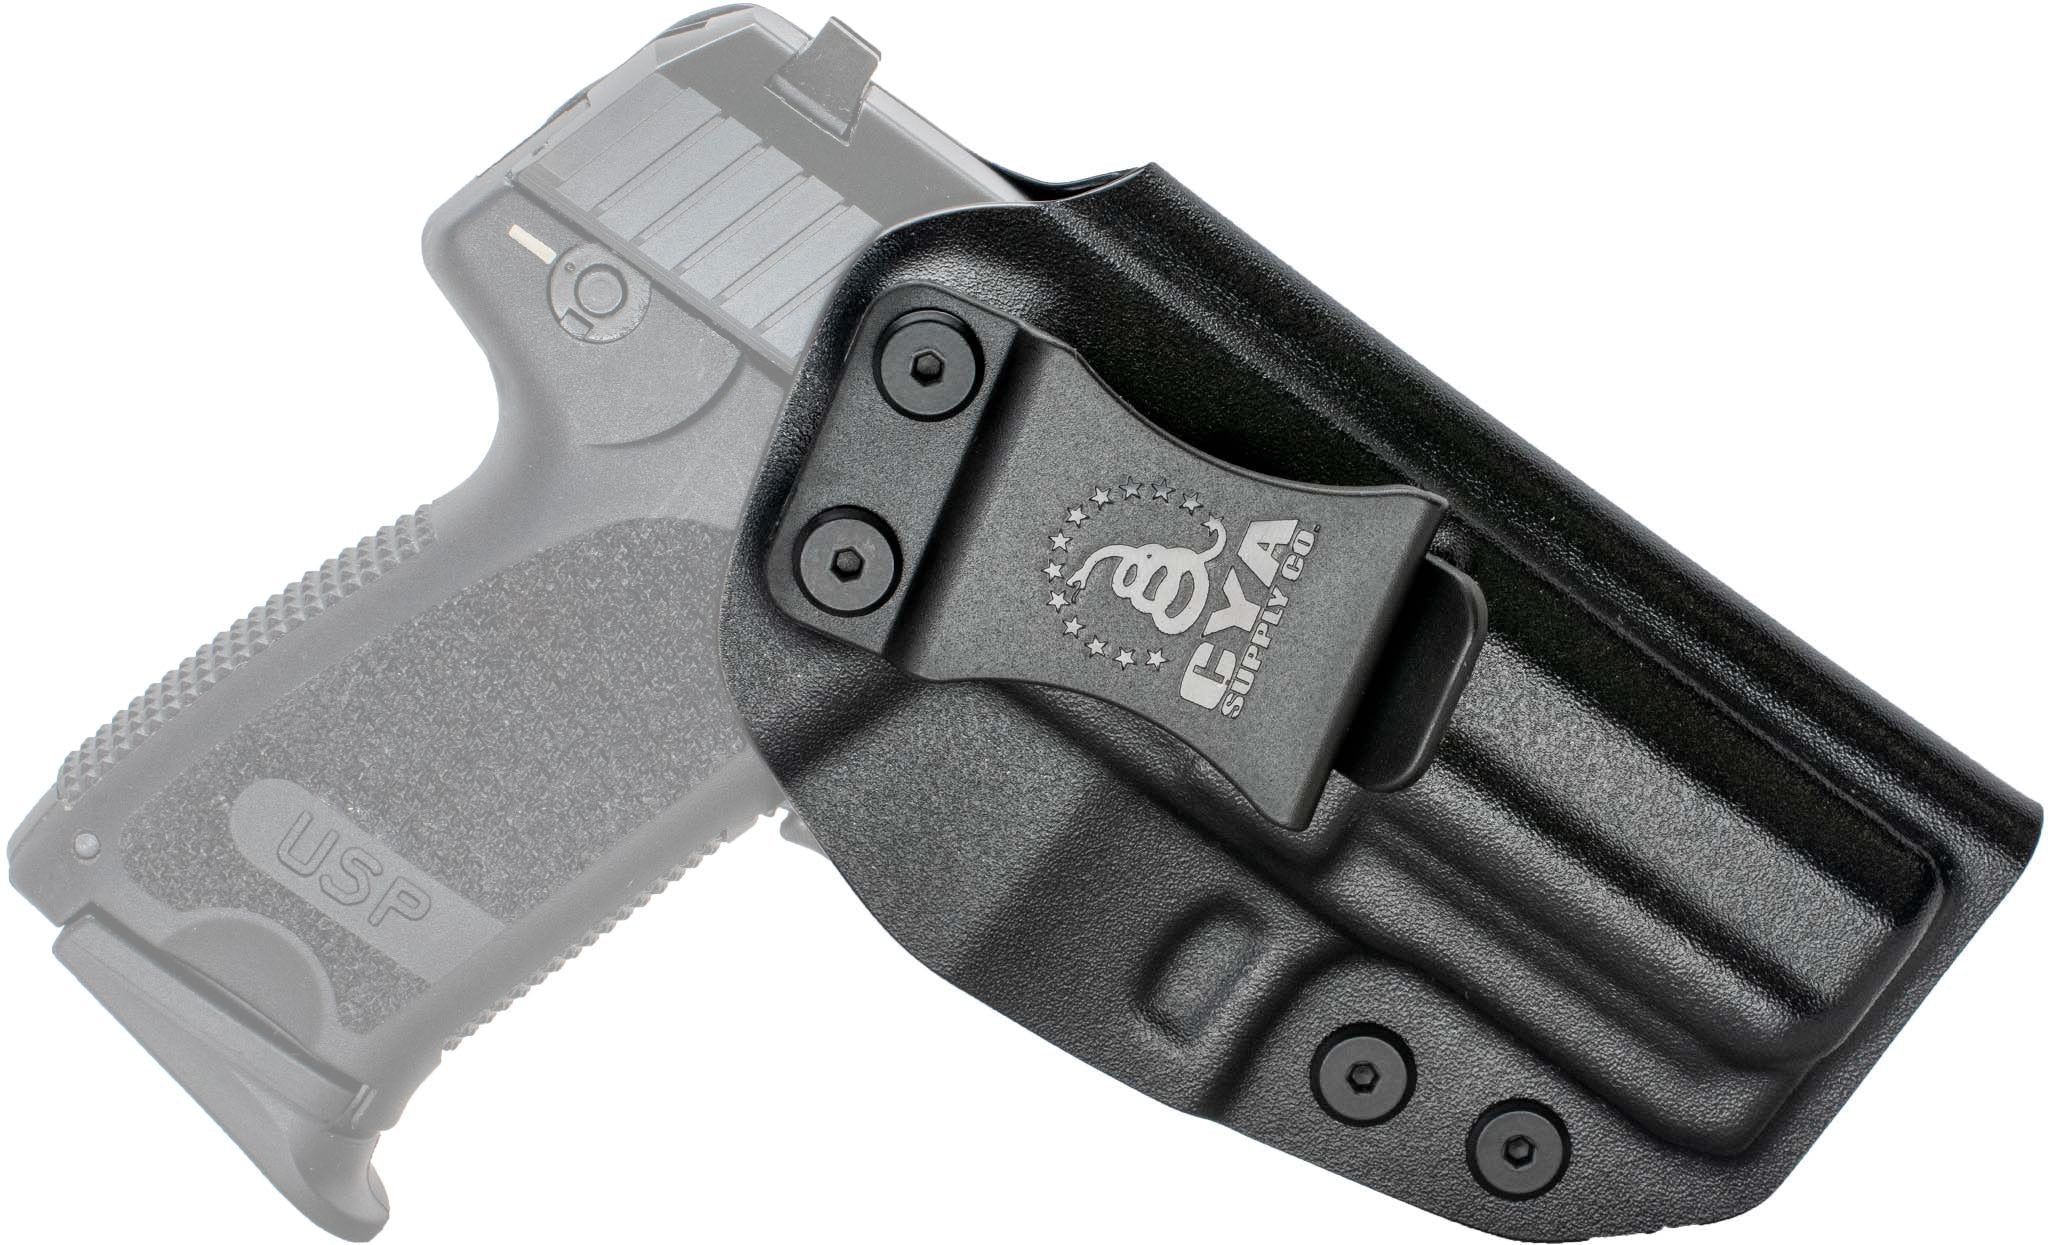 Pistol service case Level III H&K USP / USP Compact / SFP9 / VP9 Cytac®